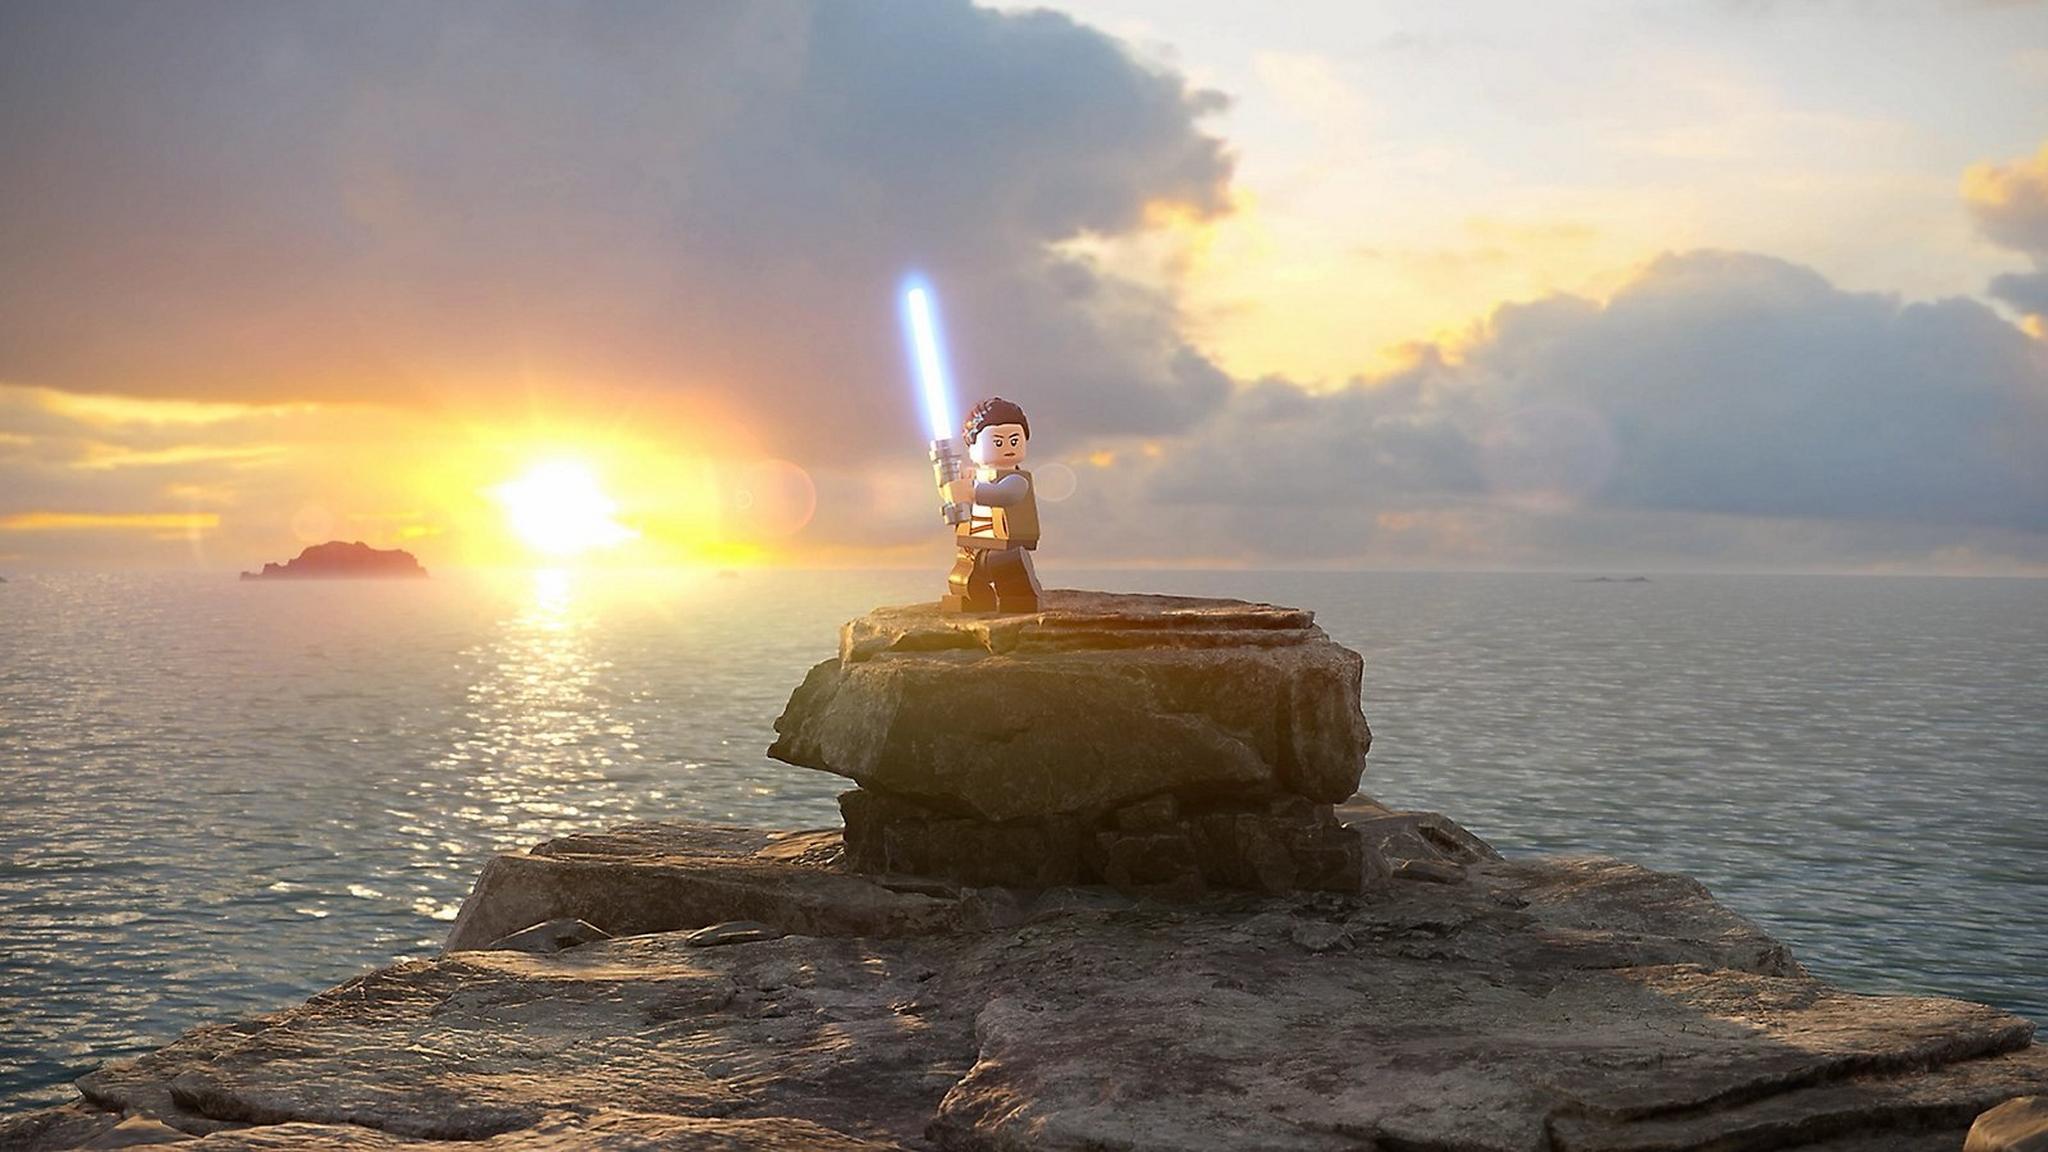 Lego Star Wars The Skywalker Saga - Standard Edition - Xbox Game